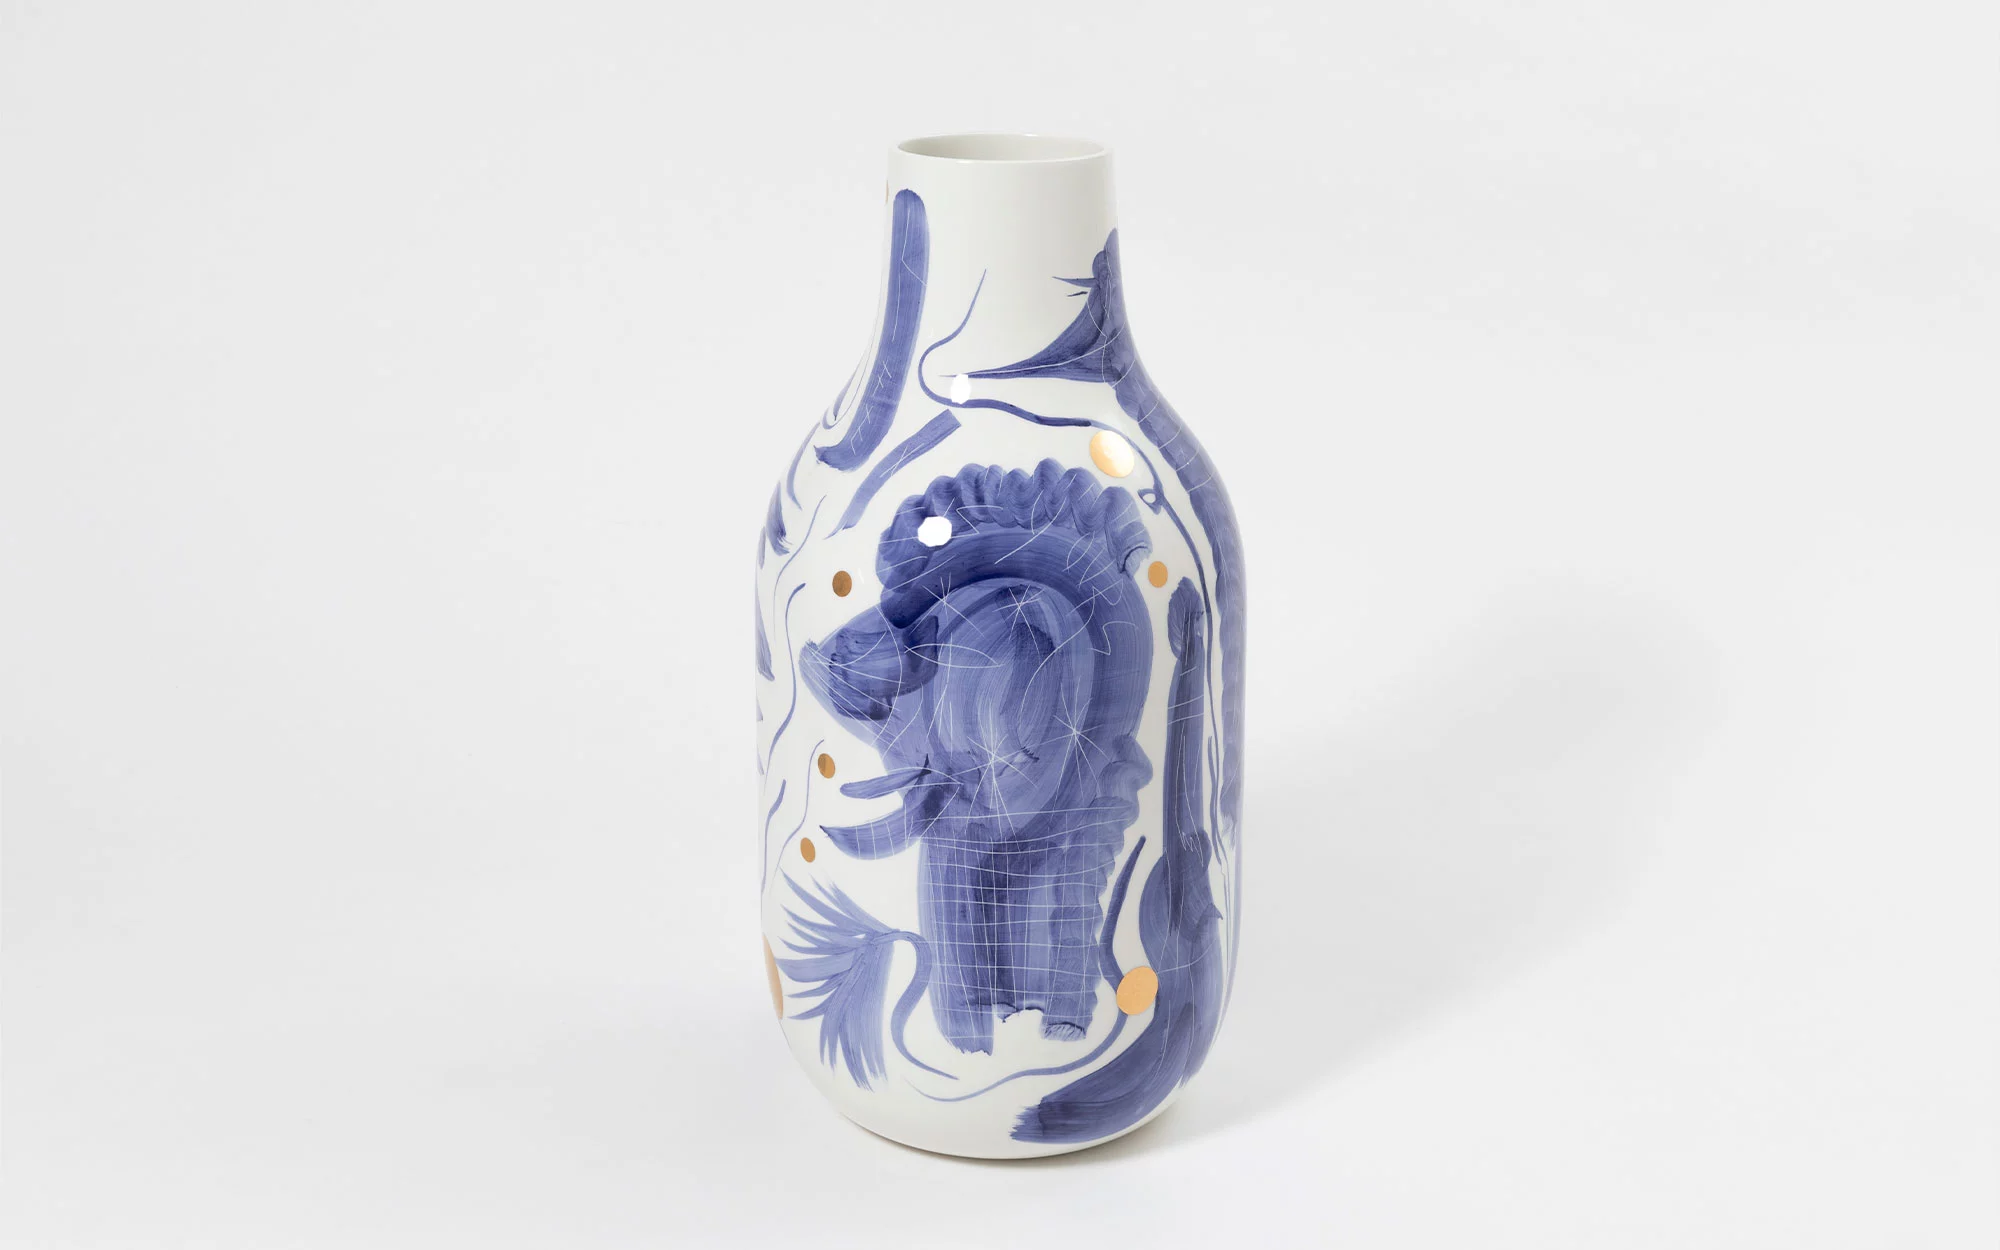 Chromatico Vase - Jaime Hayon - Pendant light - Galerie kreo